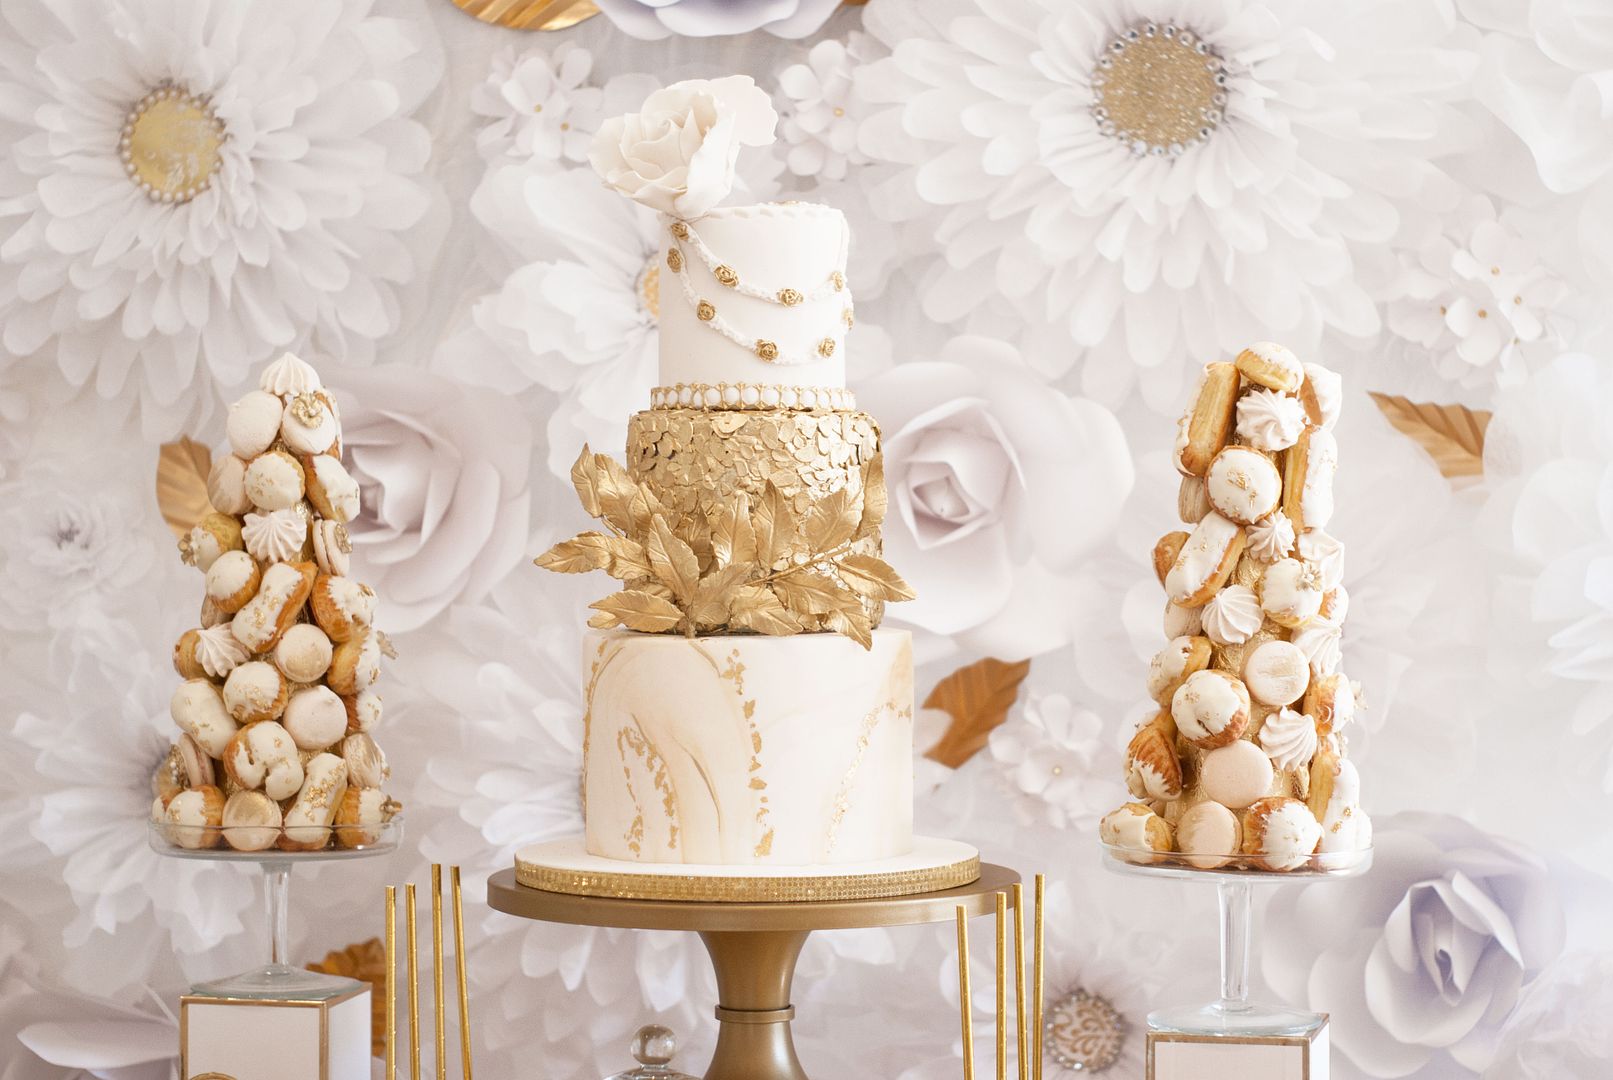 Toronto Wedding Cake, Fruitilicious Creations and Cakes, 